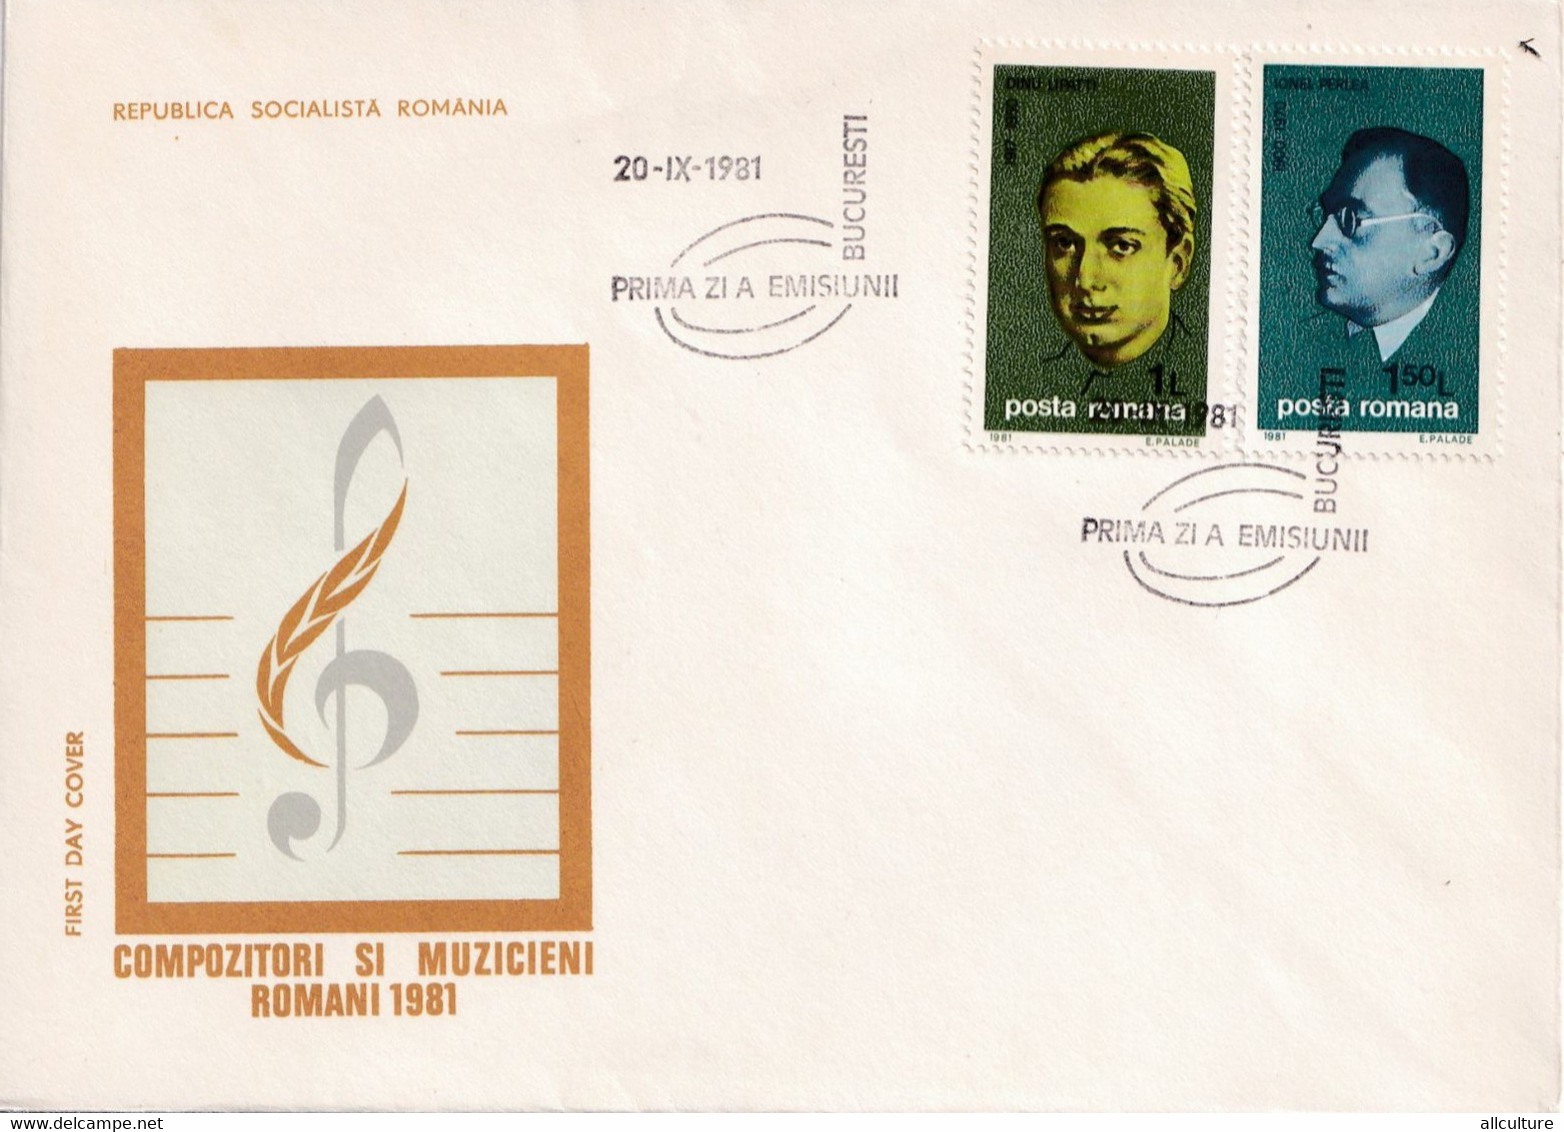 A2876 - Romanian Musicians And Composers, Bucuresti  1981, Socialist Republic Of Romania 3 Covers  FDC - Zangers